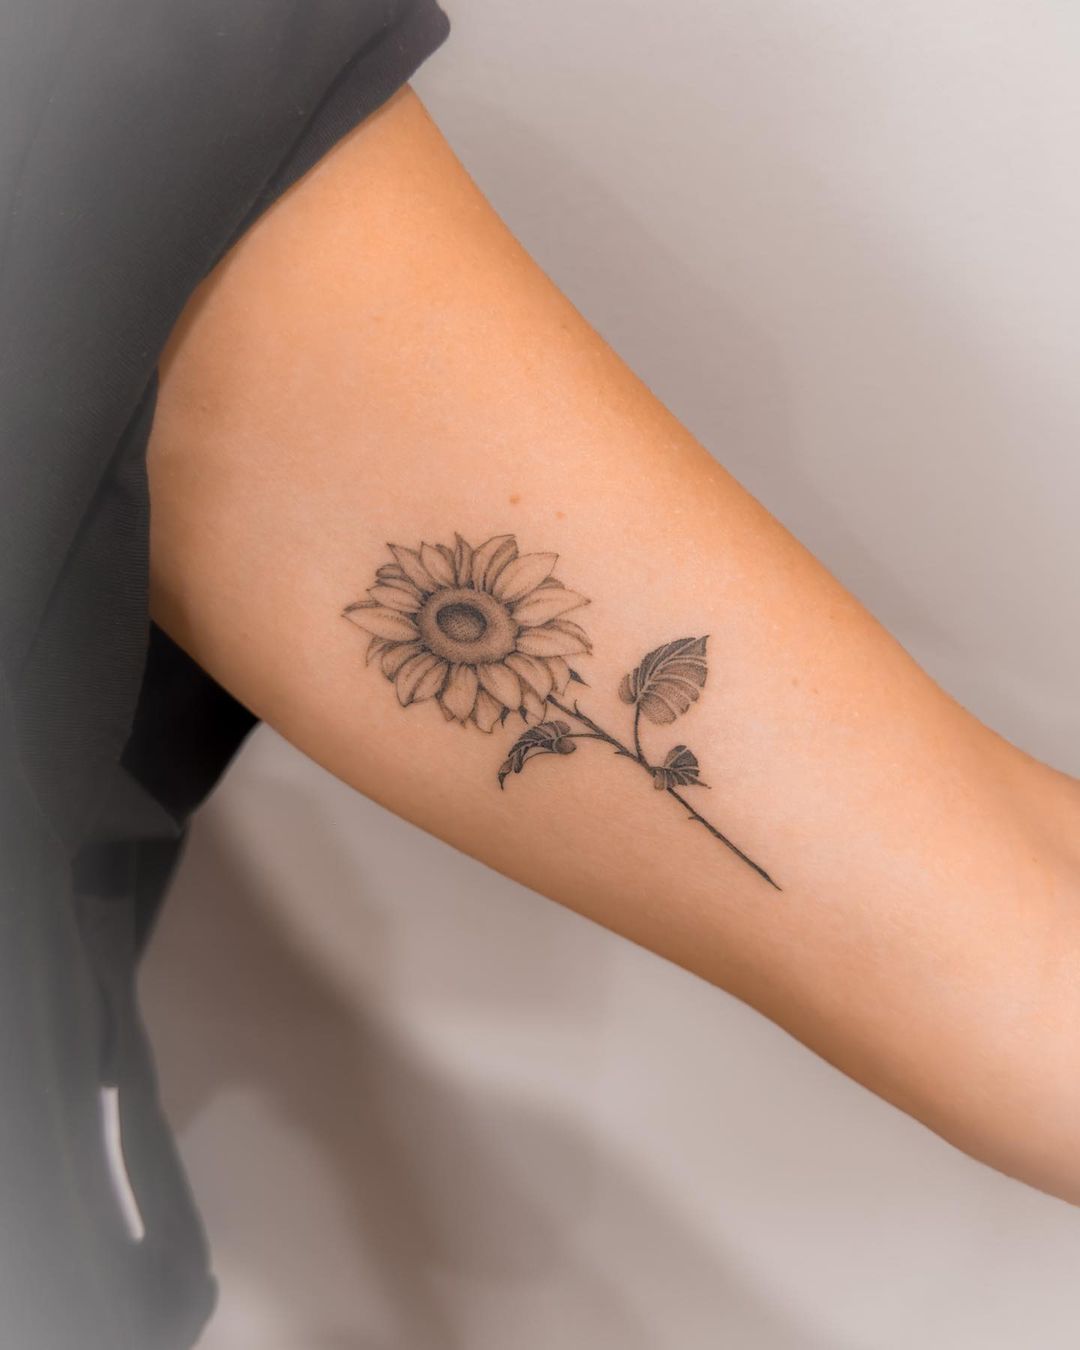 Simple sunflower tattoo by inlayerink